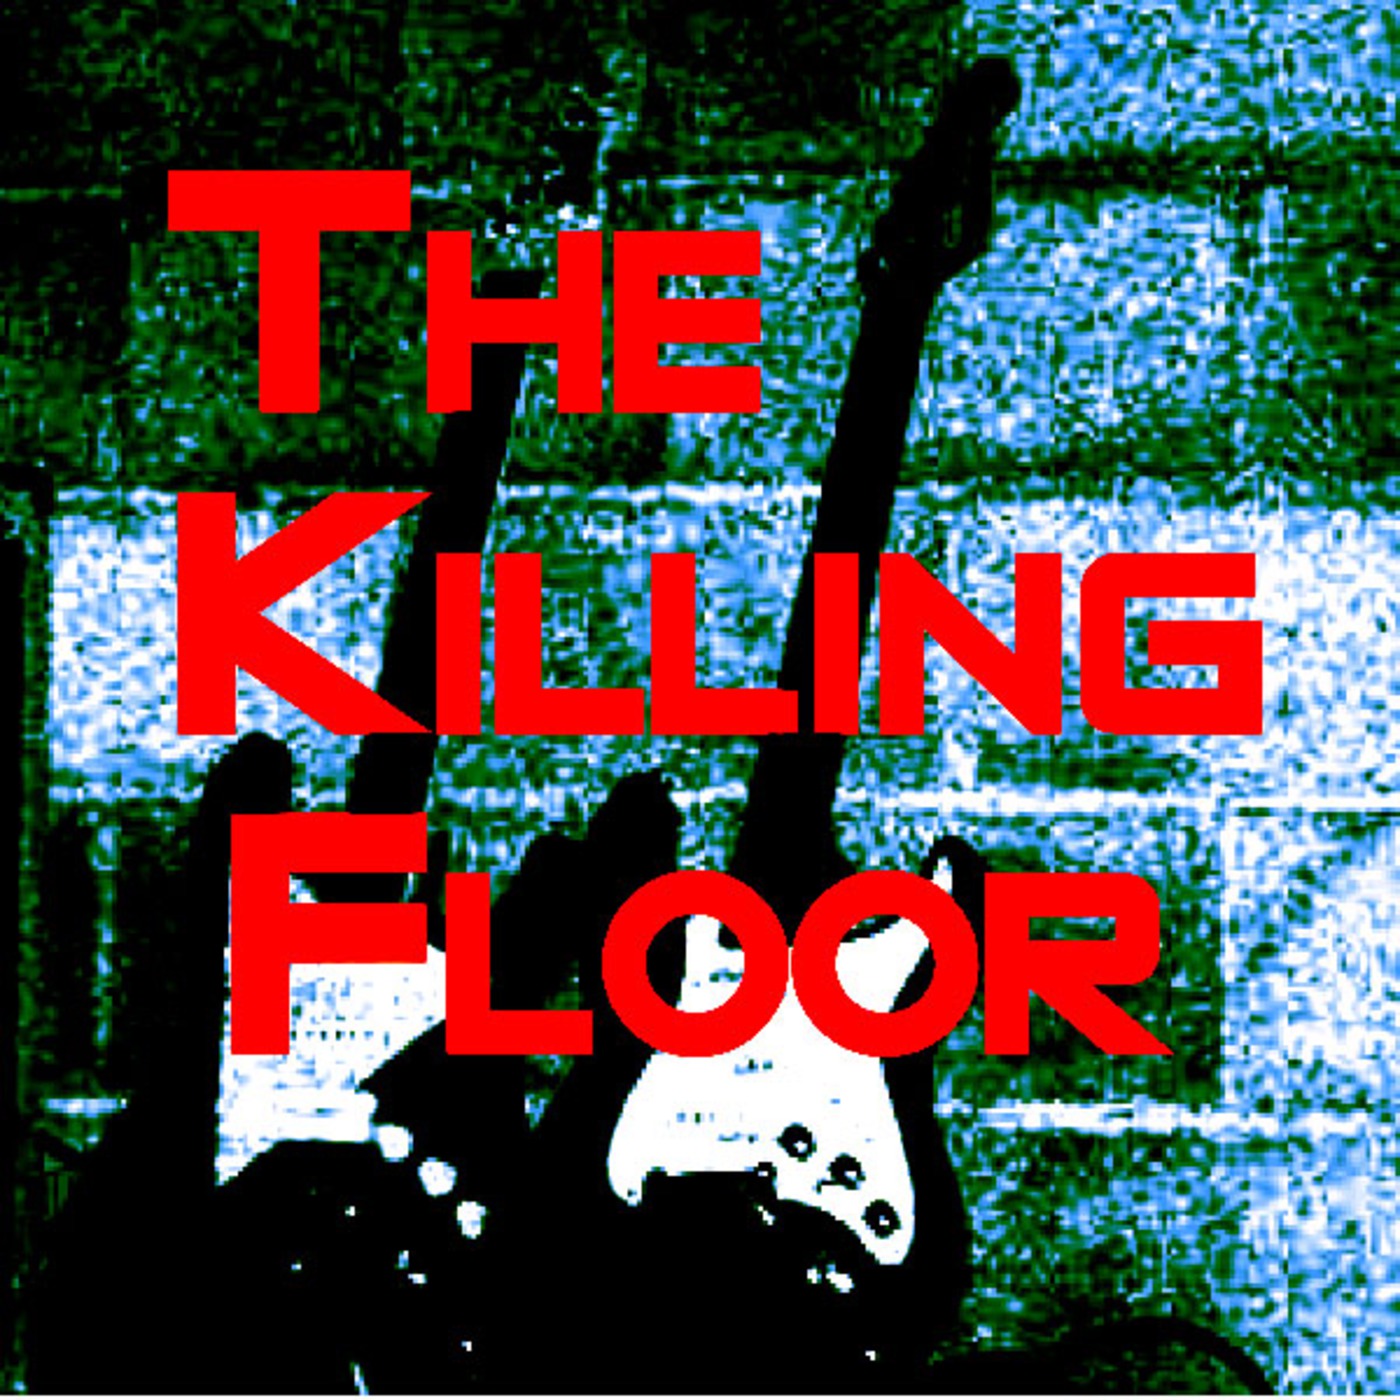 THE KILLING FLOOR:THE KILLING FLOOR